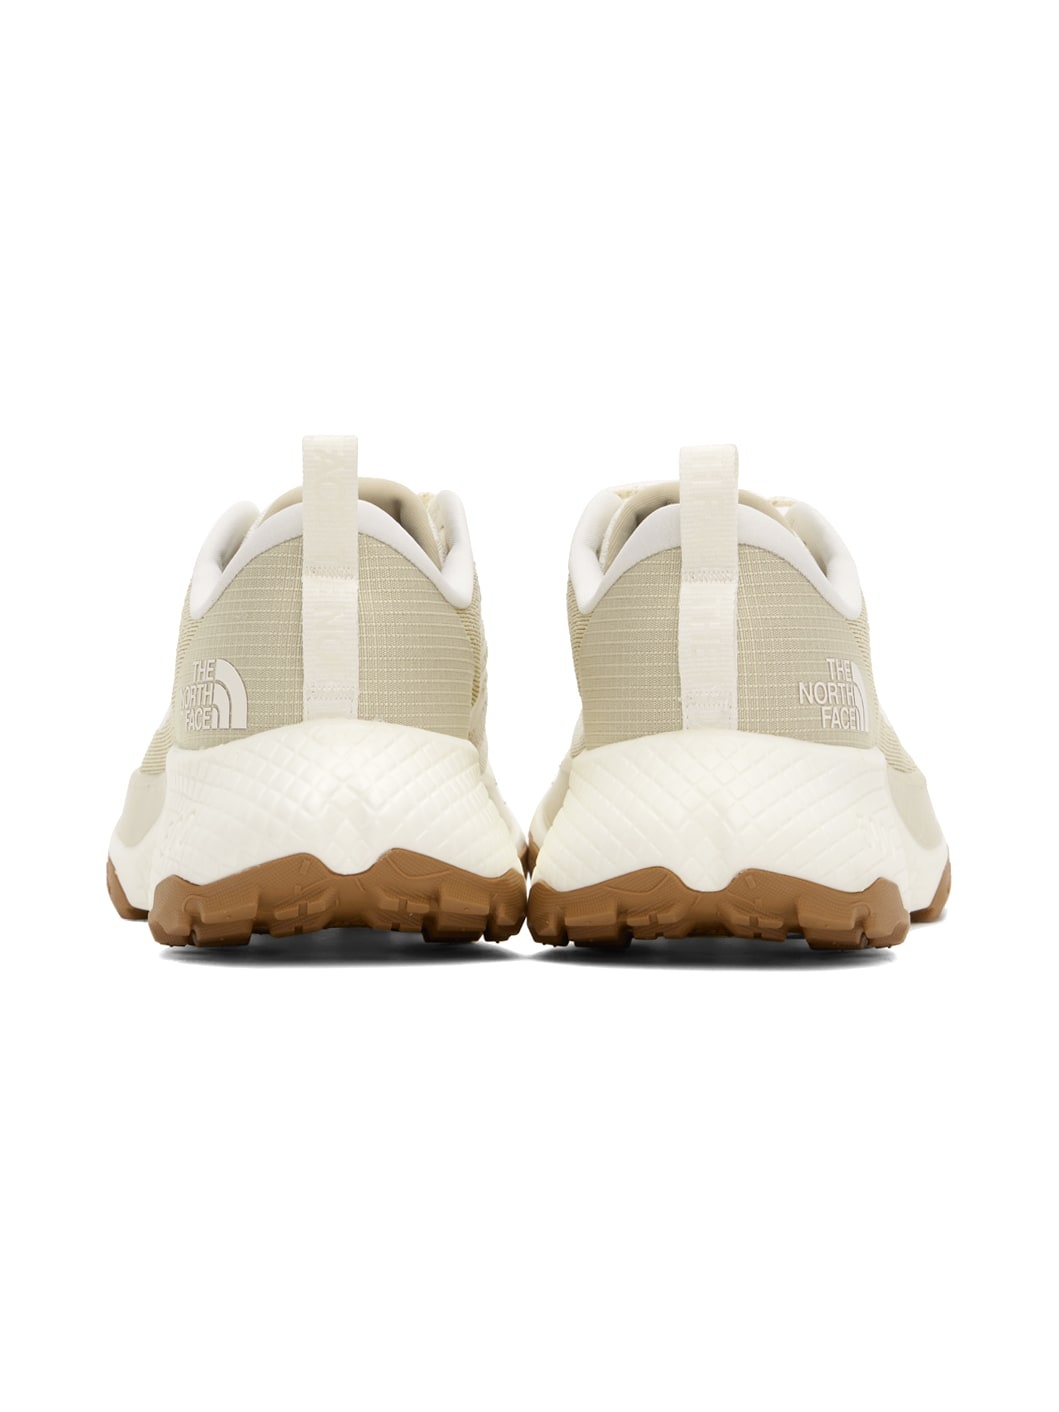 Off-White & Beige Altamesa 500 Sneakers - 2